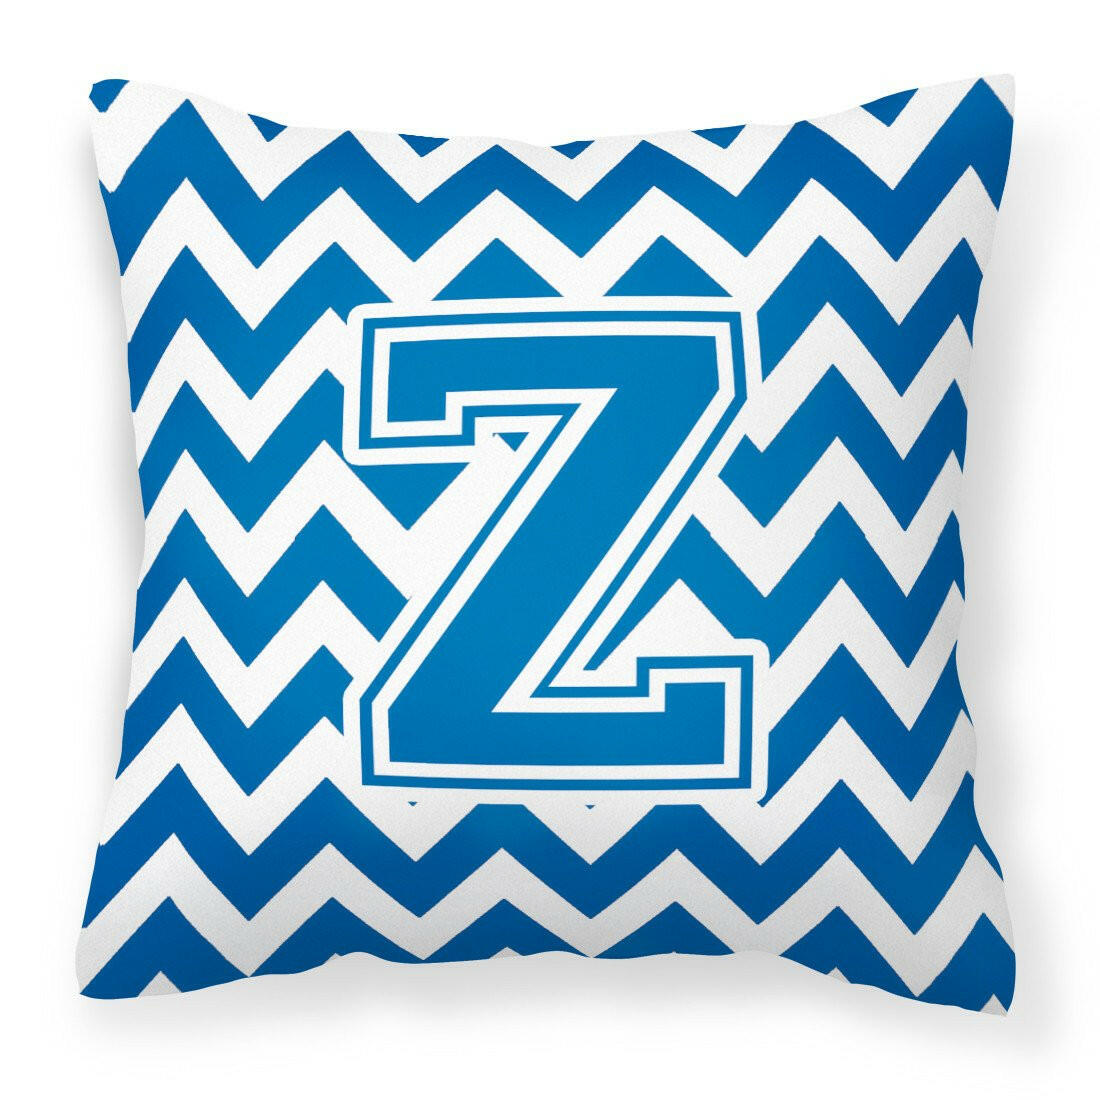 Letter Z Chevron Blue and White Fabric Decorative Pillow CJ1056-ZPW1414 by Caroline's Treasures